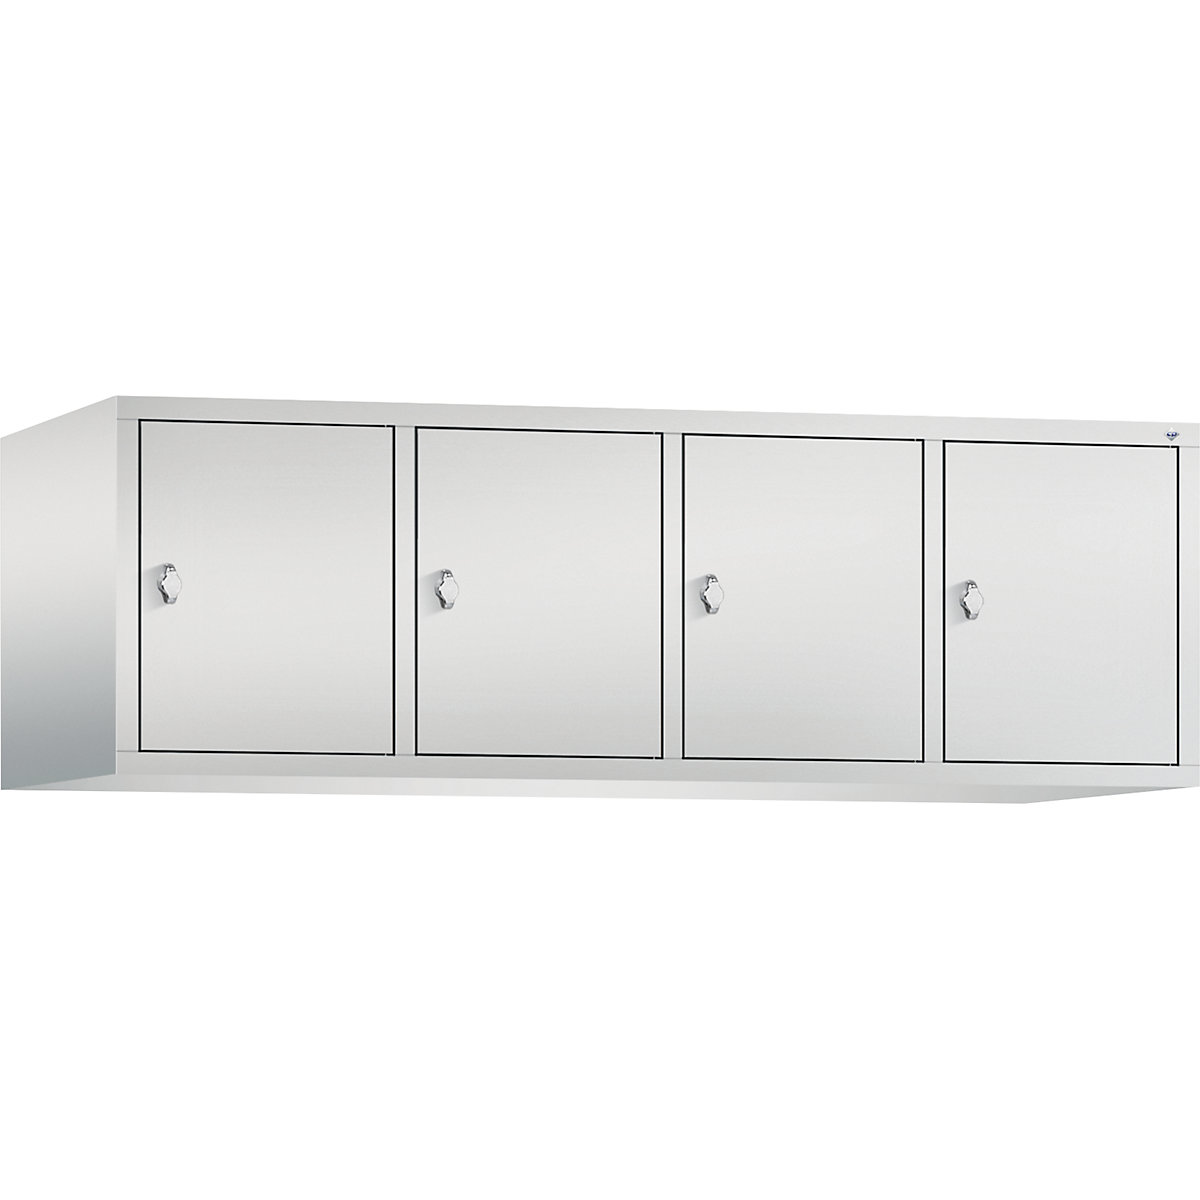 C+P – Altillo CLASSIC, 4 compartimentos, anchura de compartimento 400 mm, gris luminoso